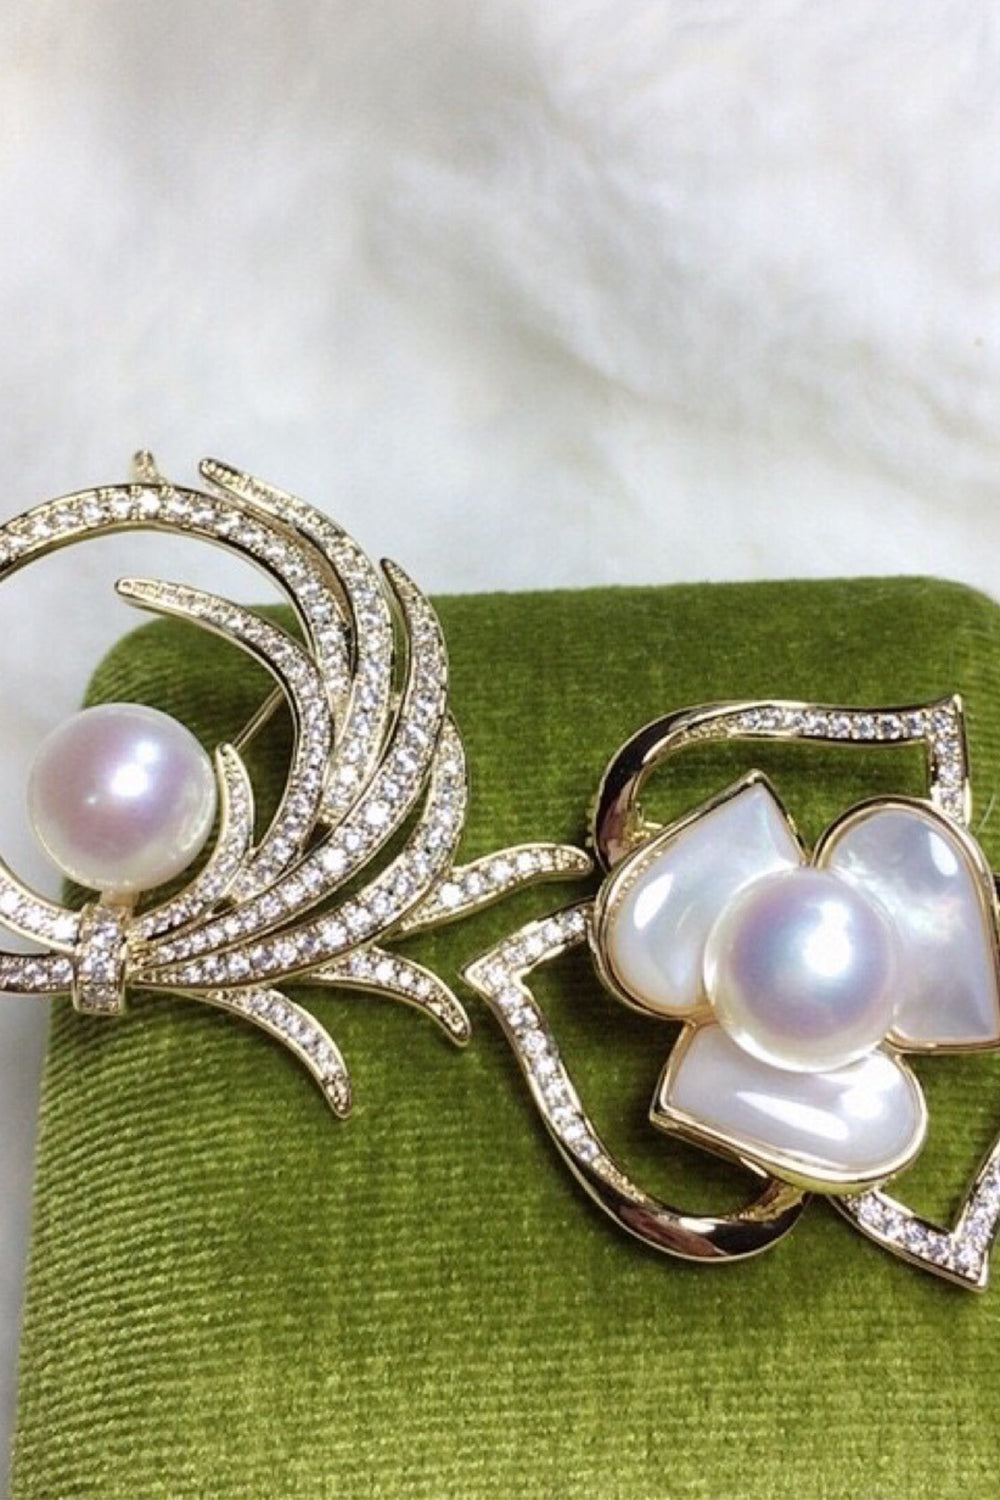 White Rhinestone & Pearls Brooch Wedding Party Jewelry